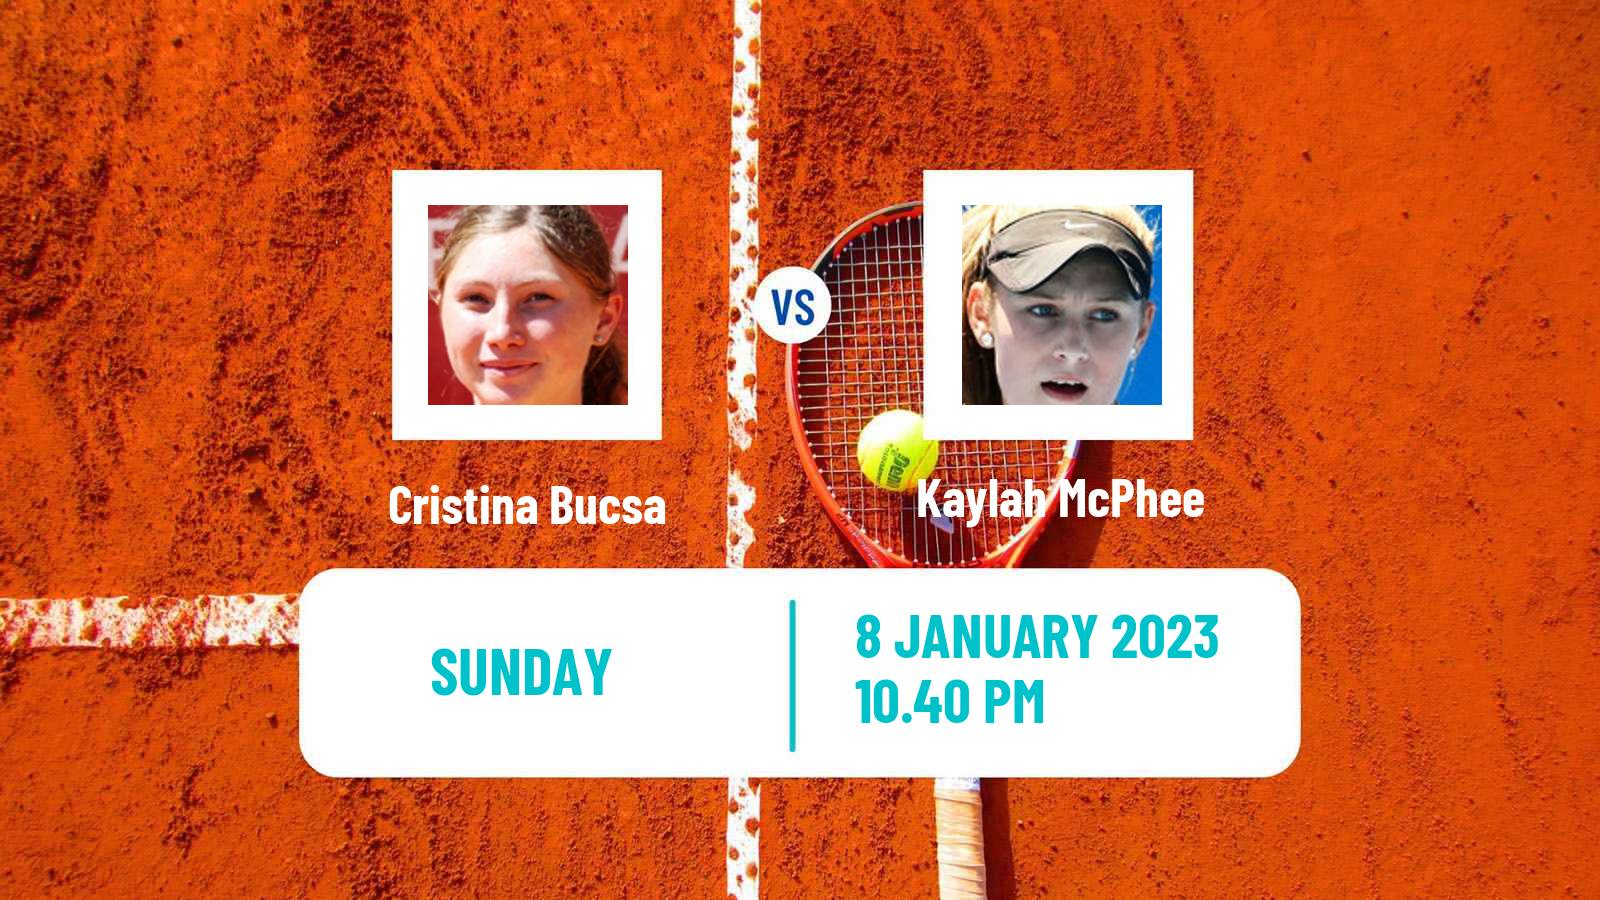 Tennis WTA Australian Open Cristina Bucsa - Kaylah McPhee